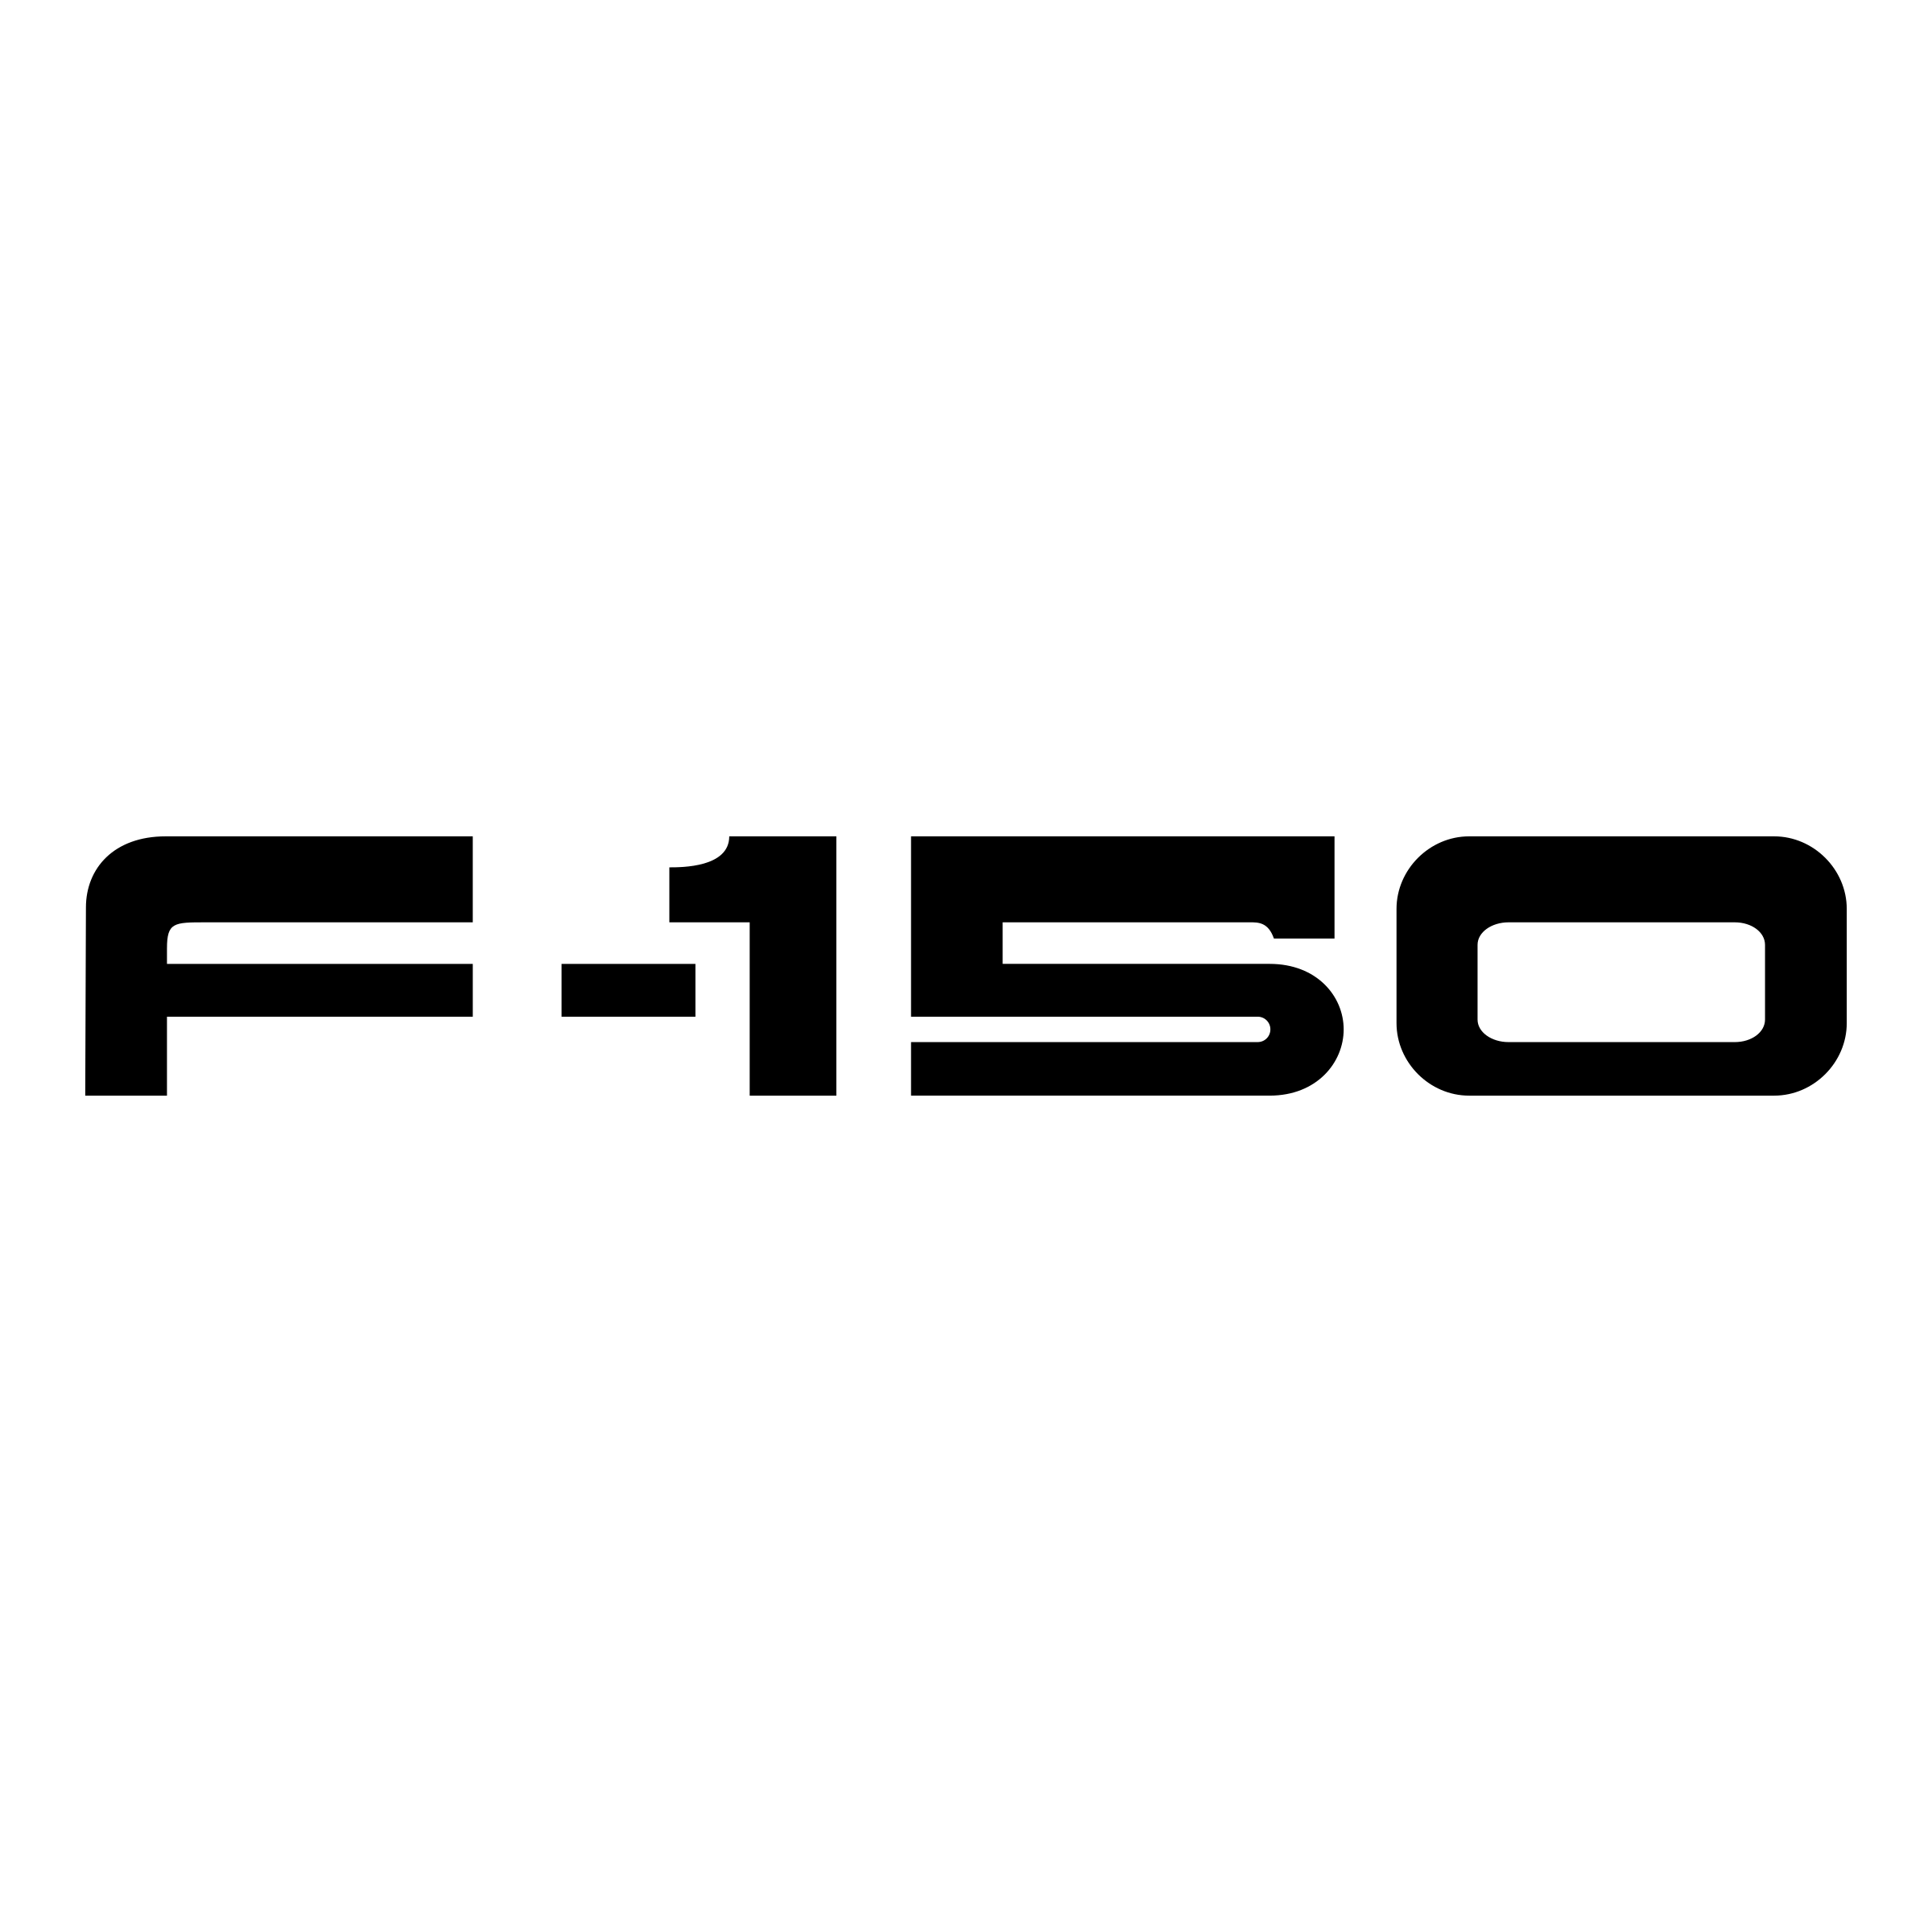 F150 Logo - Ford F 150 Logo PNG Transparent & SVG Vector - Freebie Supply